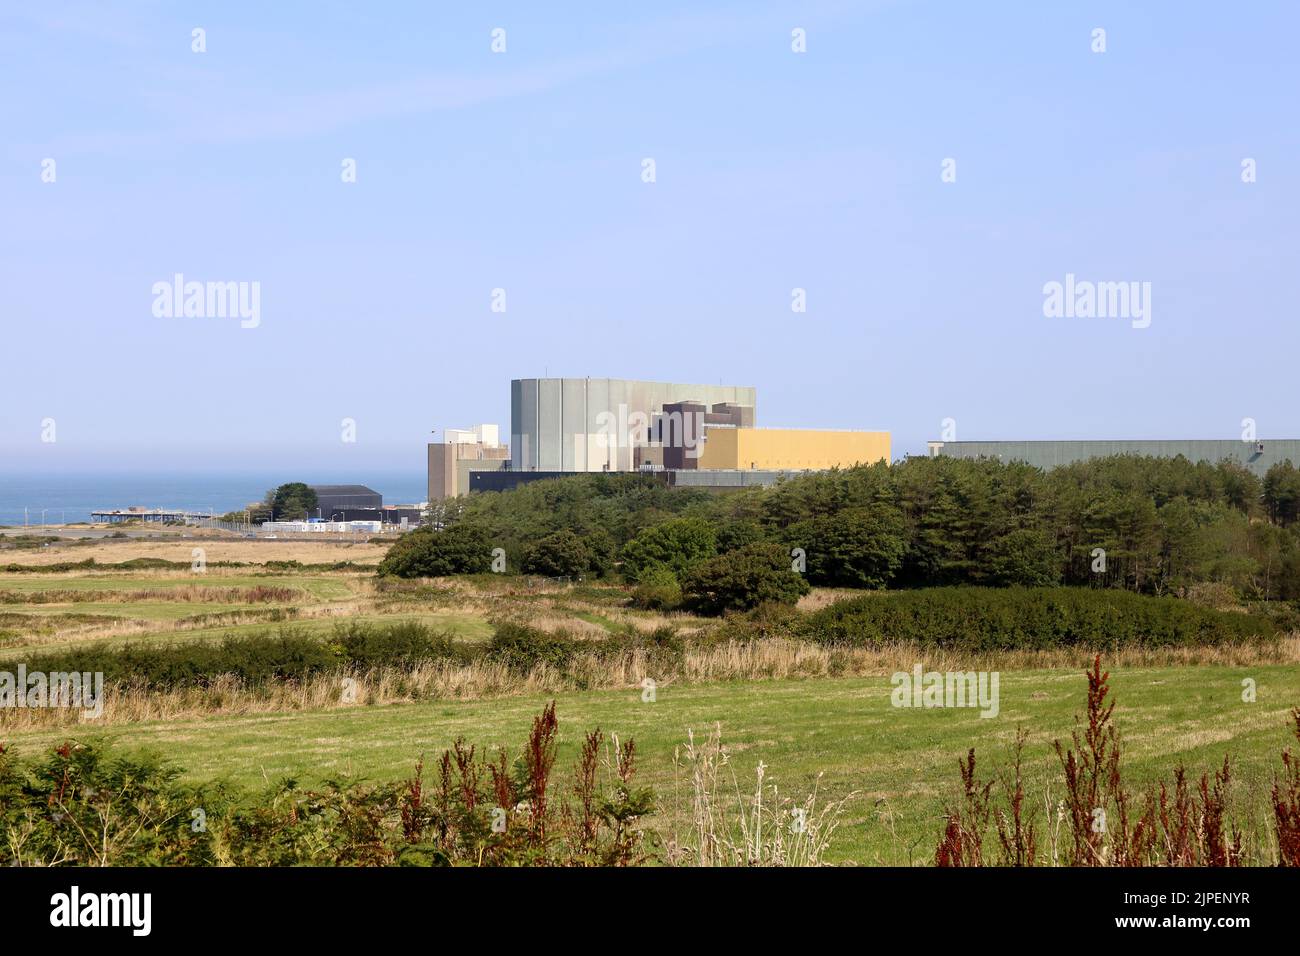 Kernkraftwerk in Wales, Großbritannien. Saubere Energie von giftigen? Stockfoto